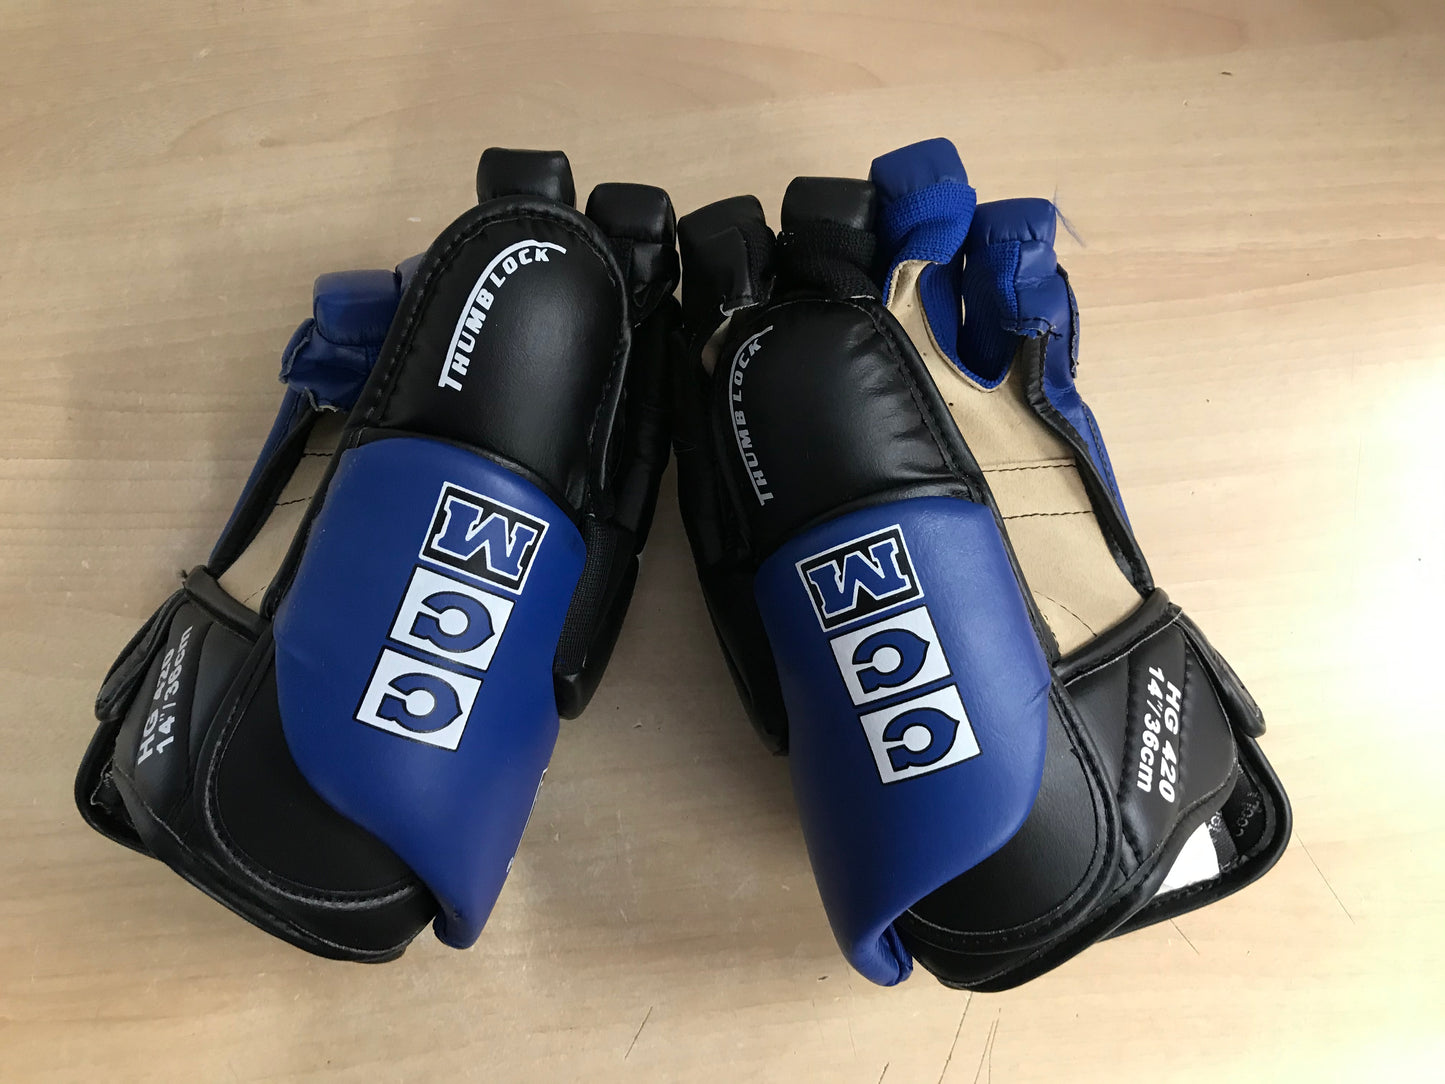 Hockey Gloves Men's Size 14 inch CCB Blue Black New Demo Model